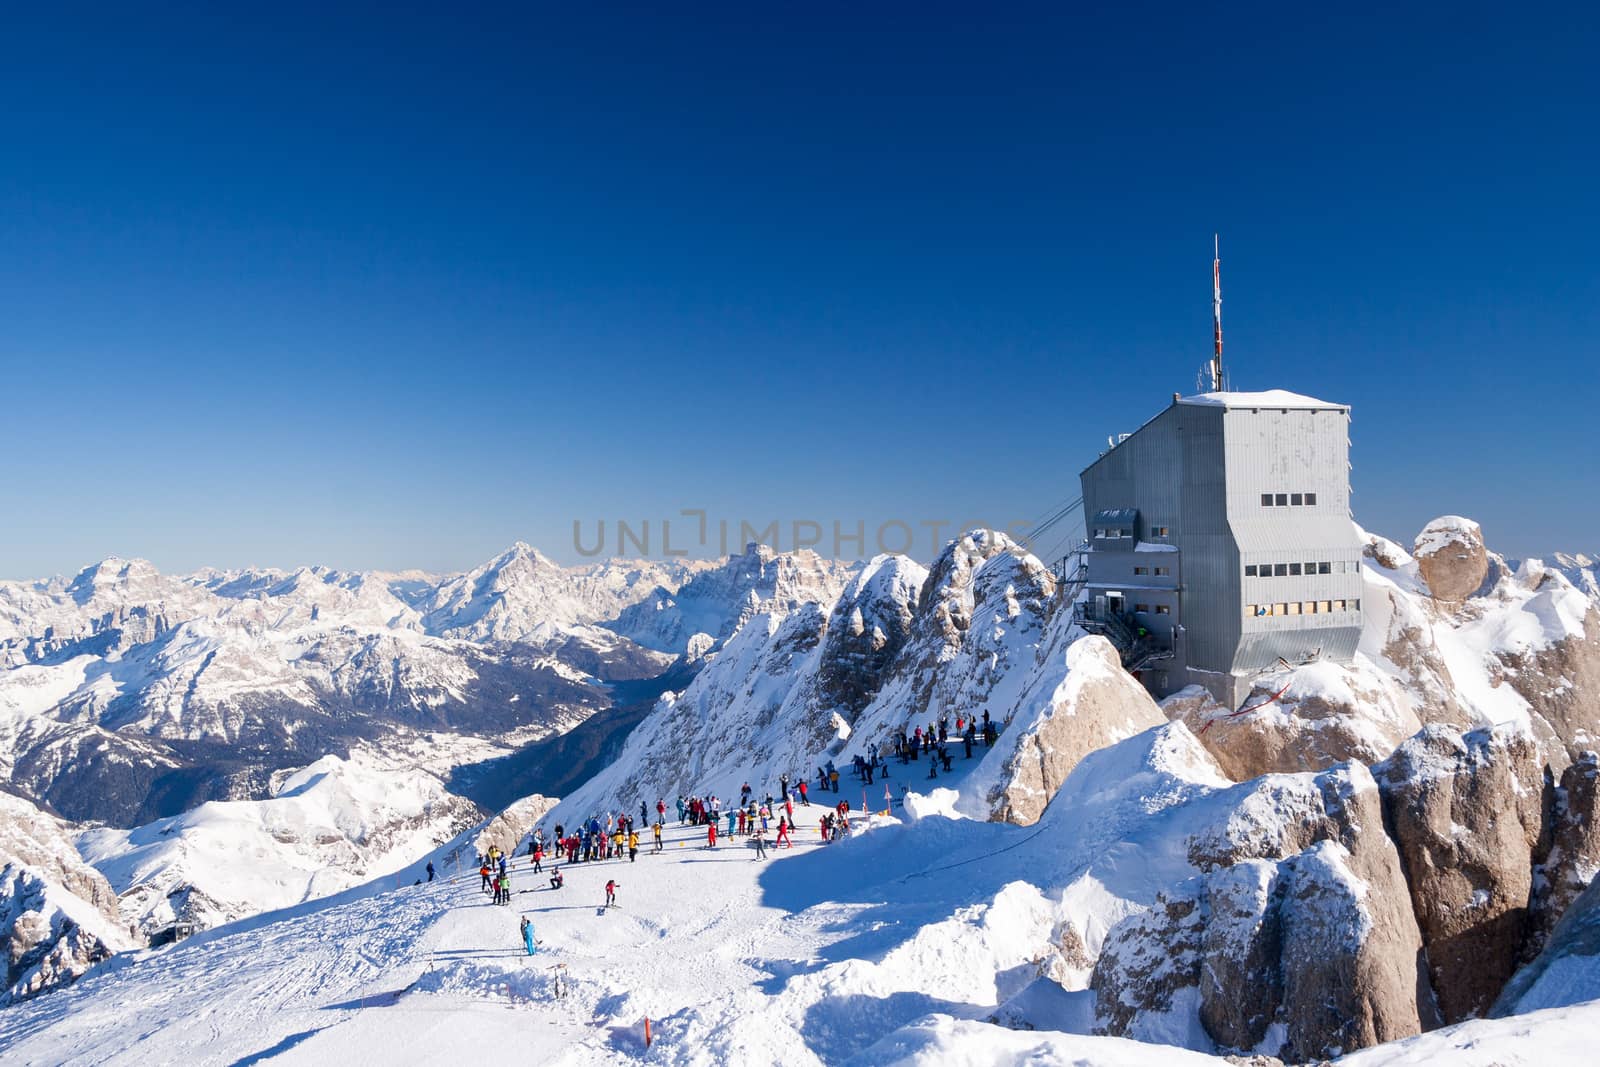 At the Marmolada glacier skiing slopes at sunny winter day by straannick